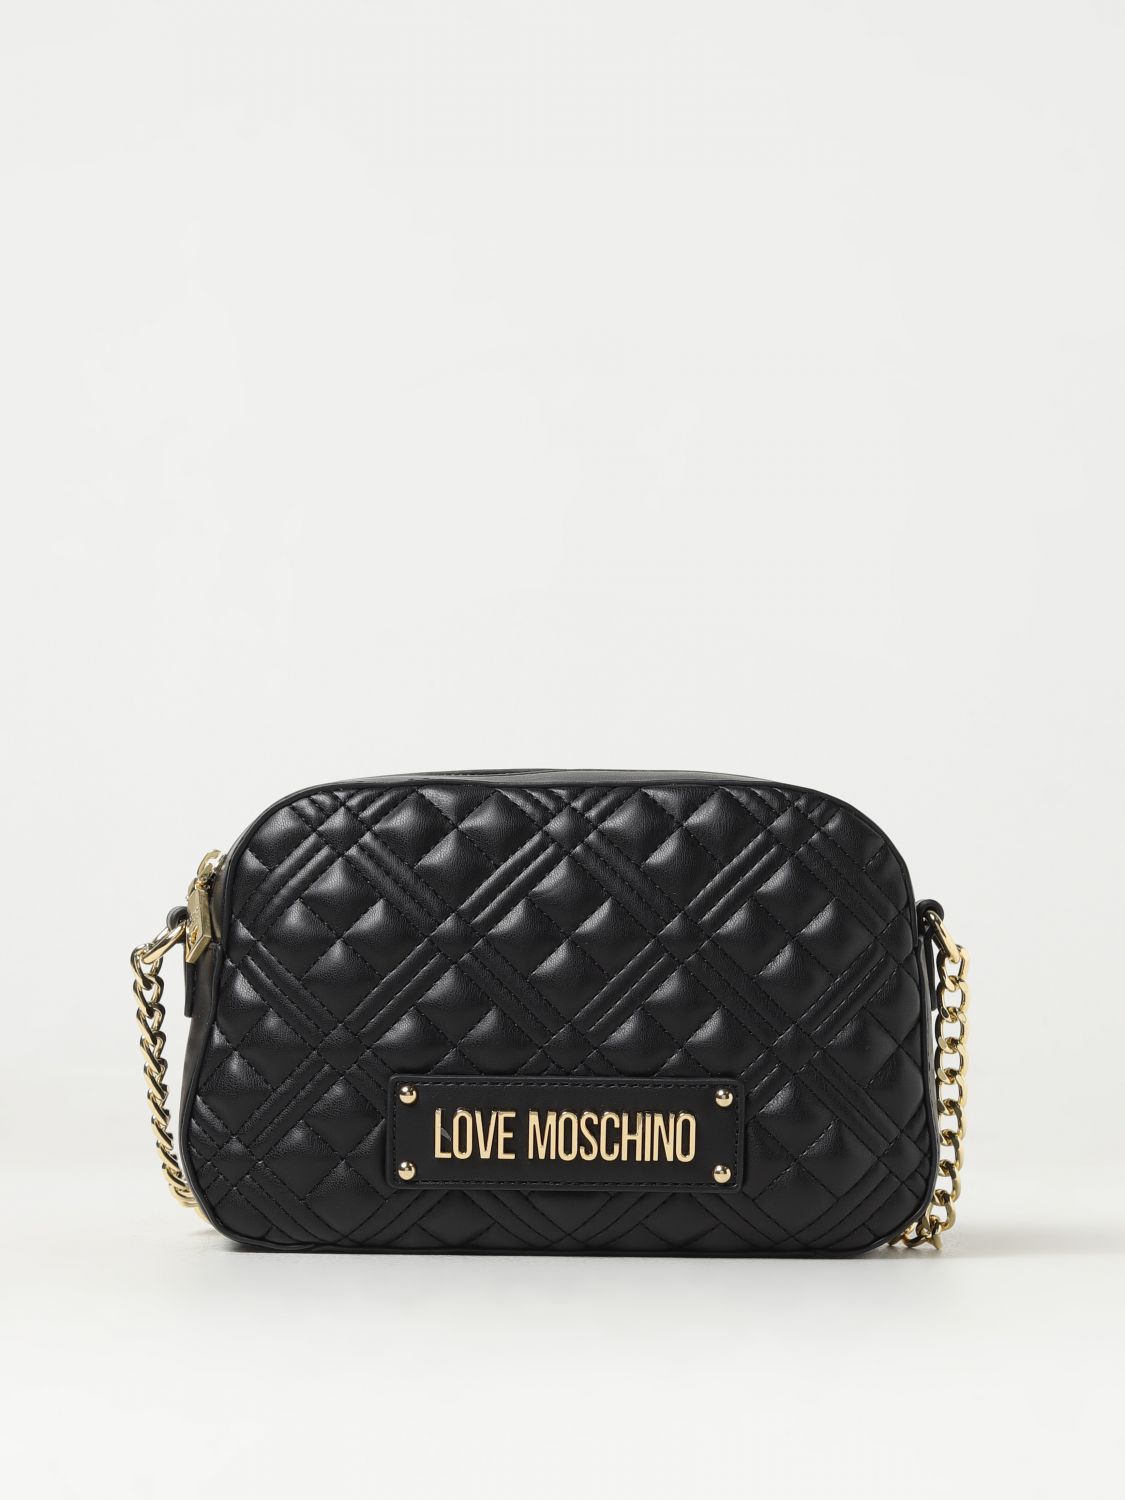 Love Moschino purse - Women's handbags